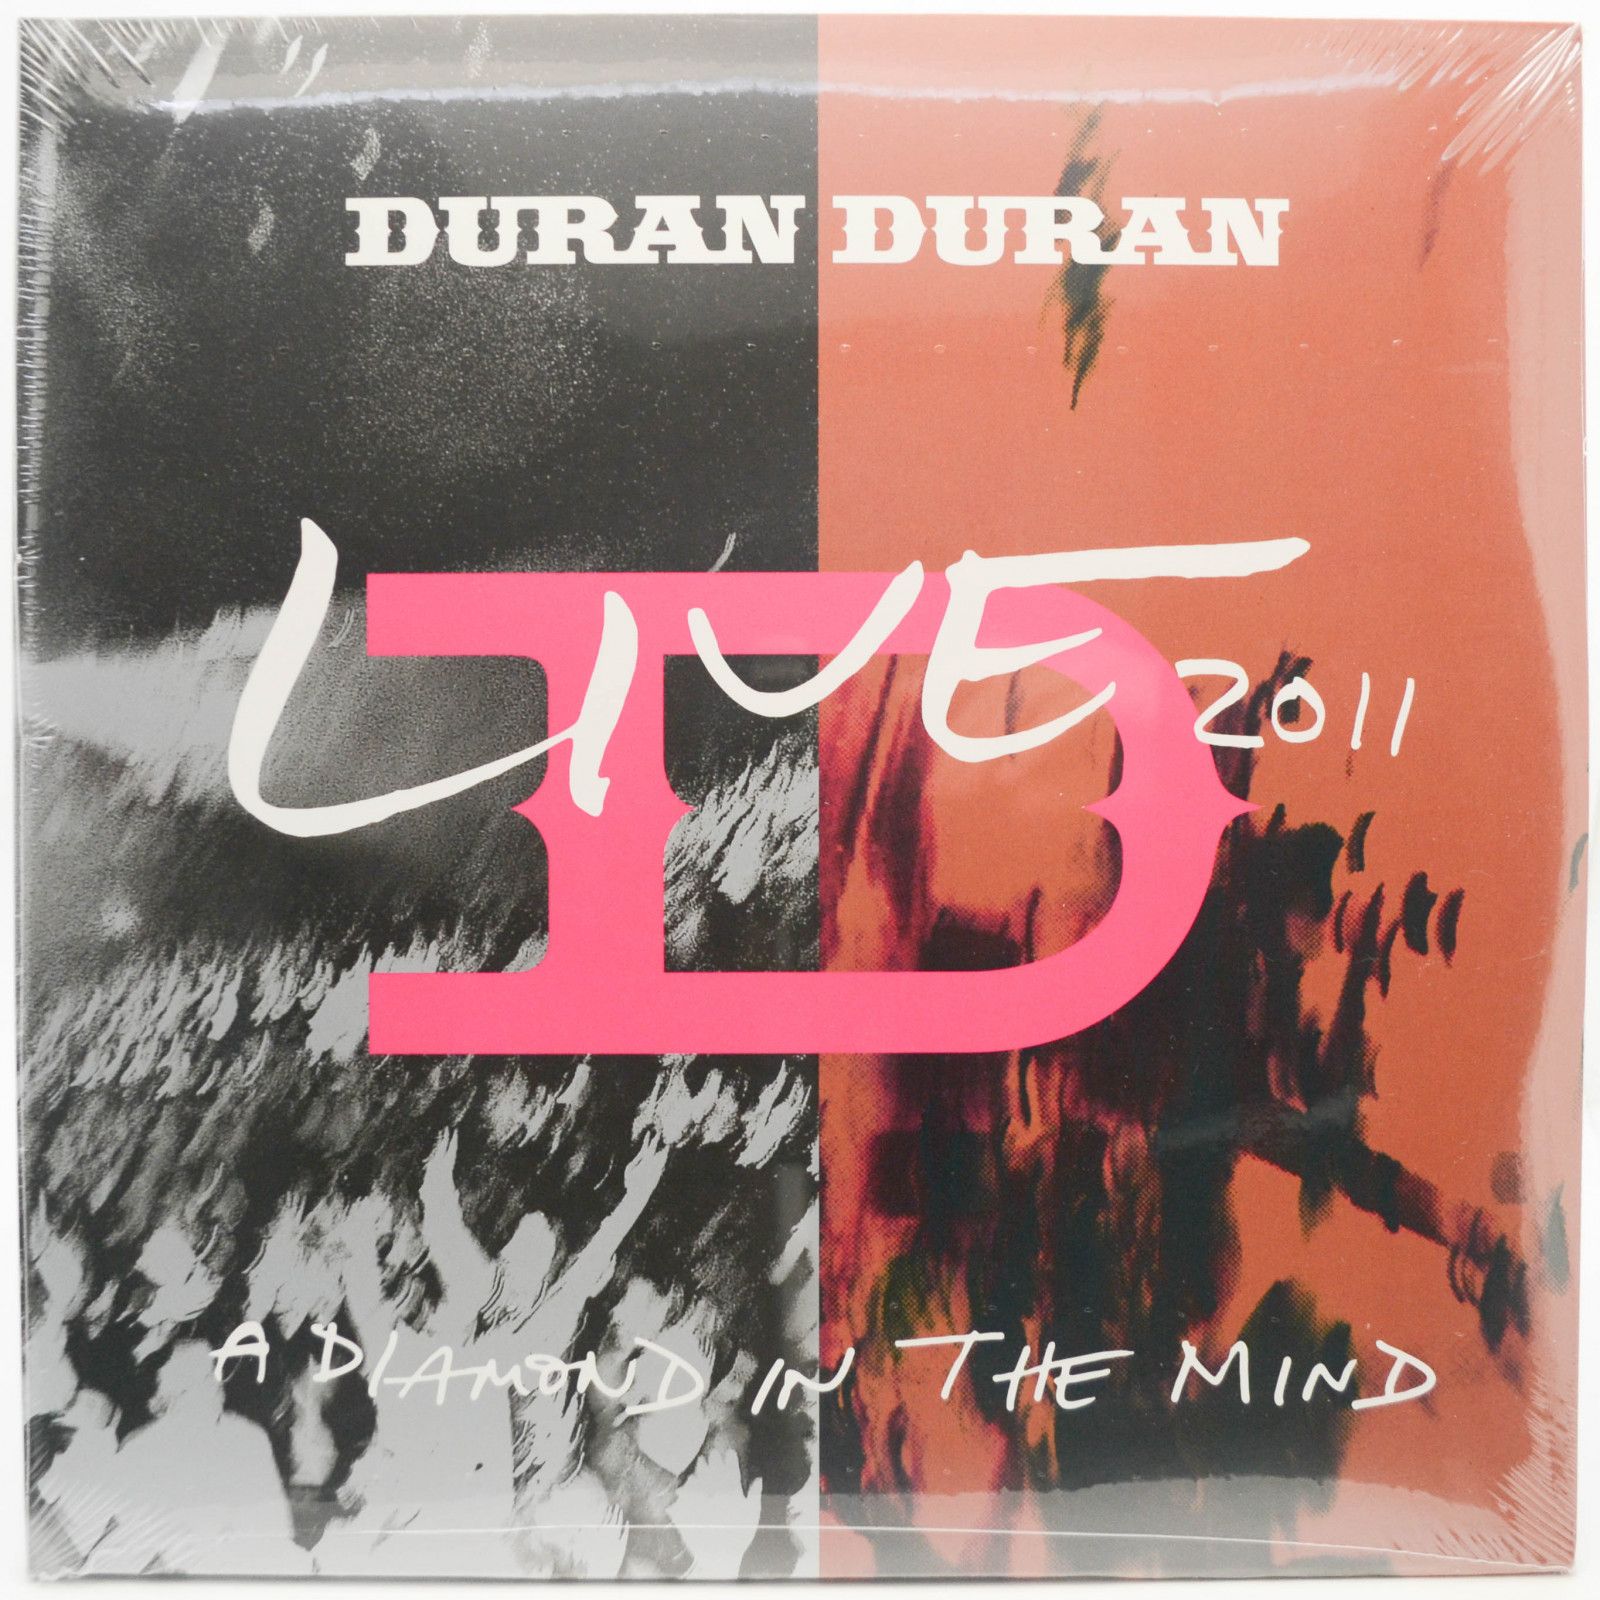 Duran Duran — Live 2011 (A Diamond In The Mind) (2LP), 2012